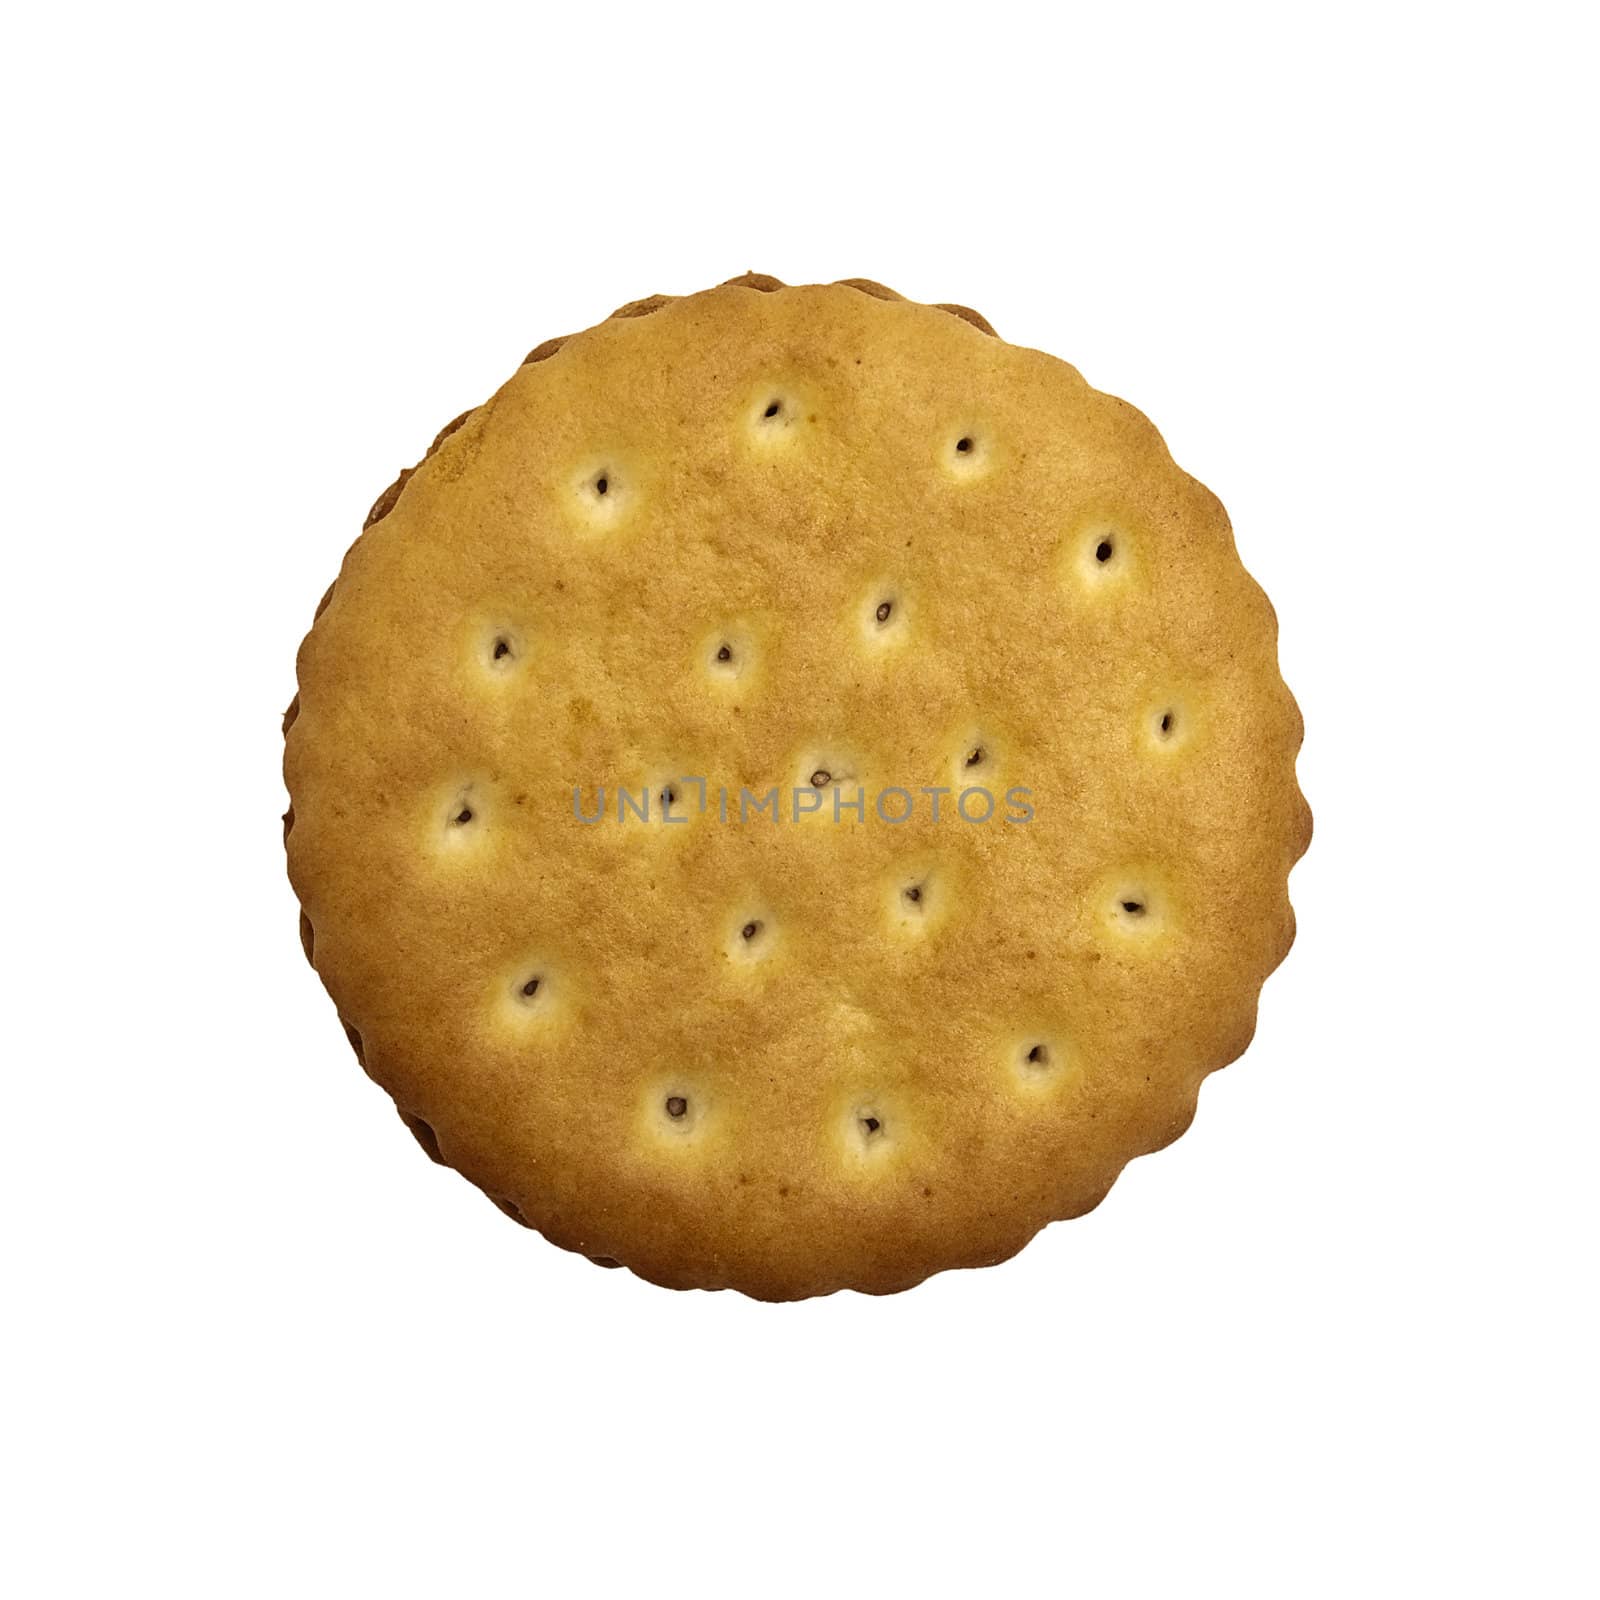 Crunchy cookie round on a white background.